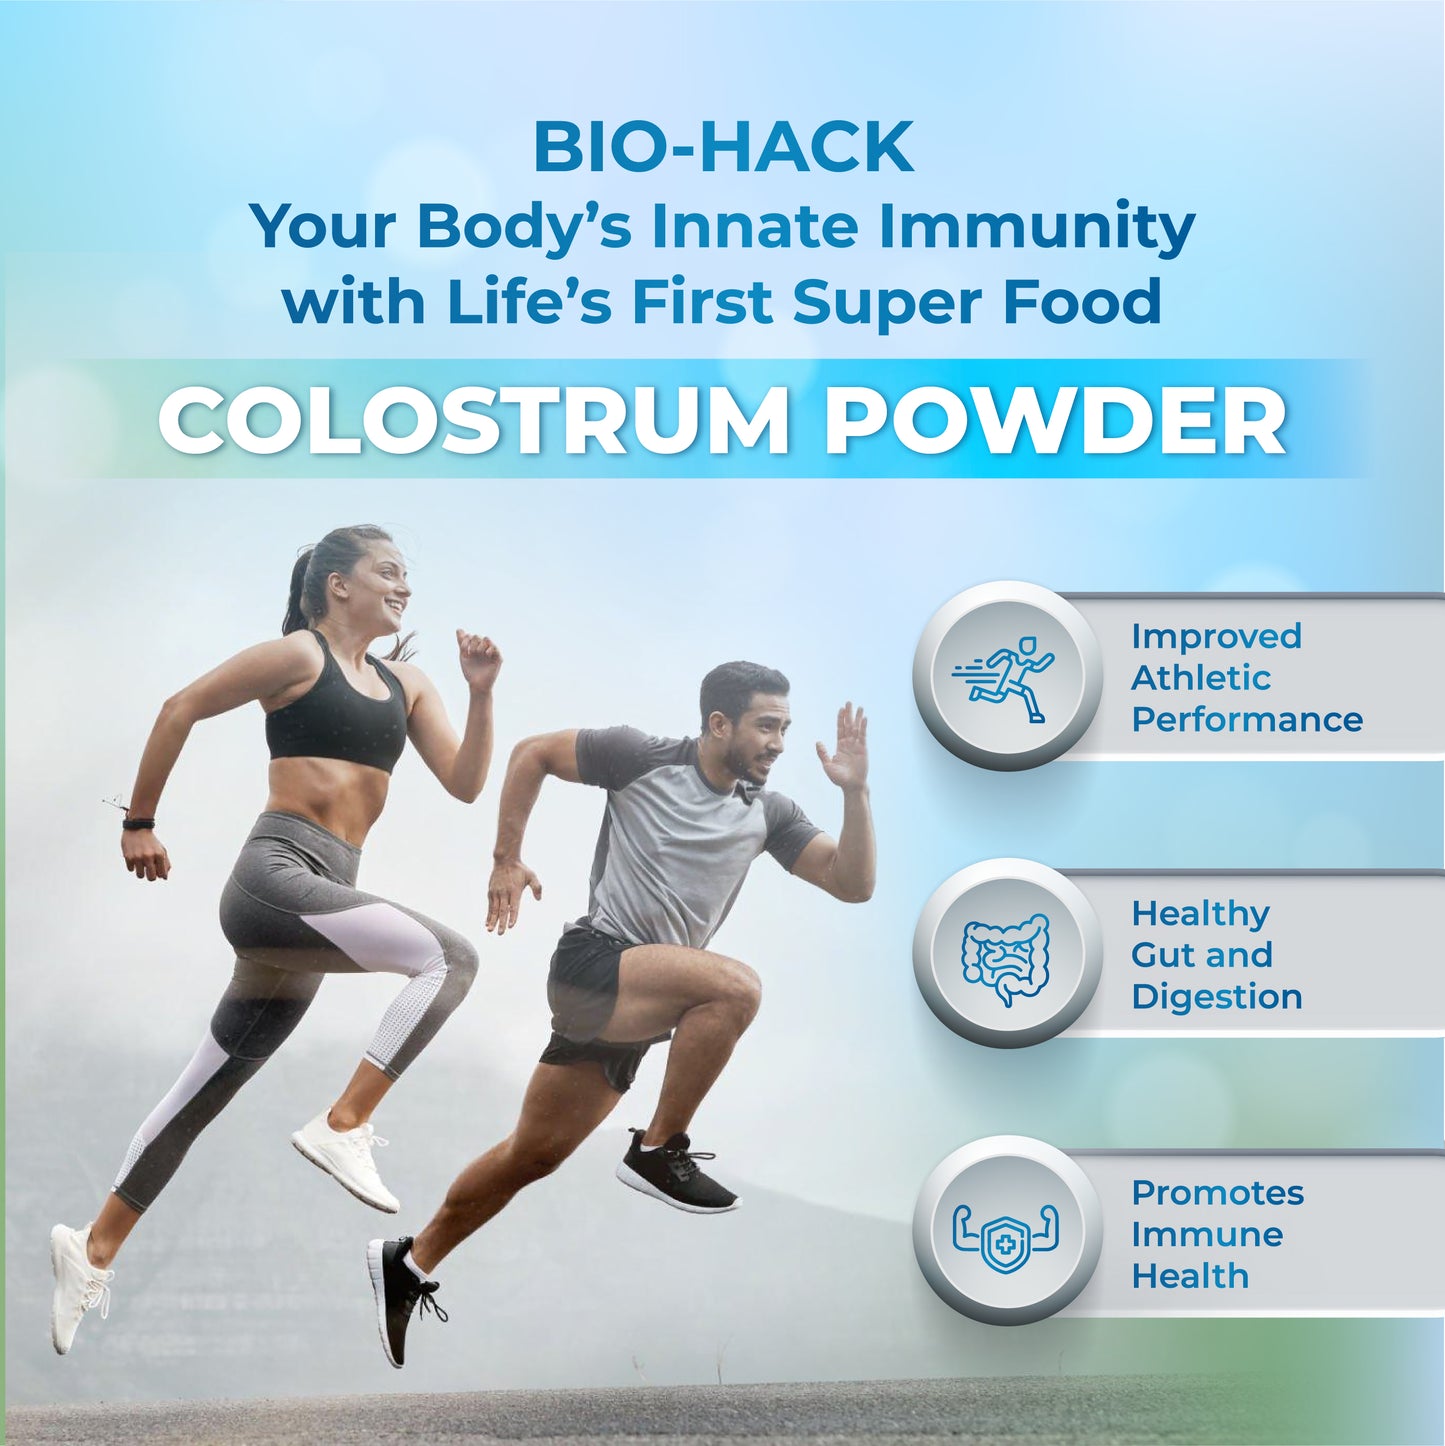 Bovine Colostrum Powder 150 g | Protein Lactoferrin Supplement | Hormone Free | True 6 Hour Extracted